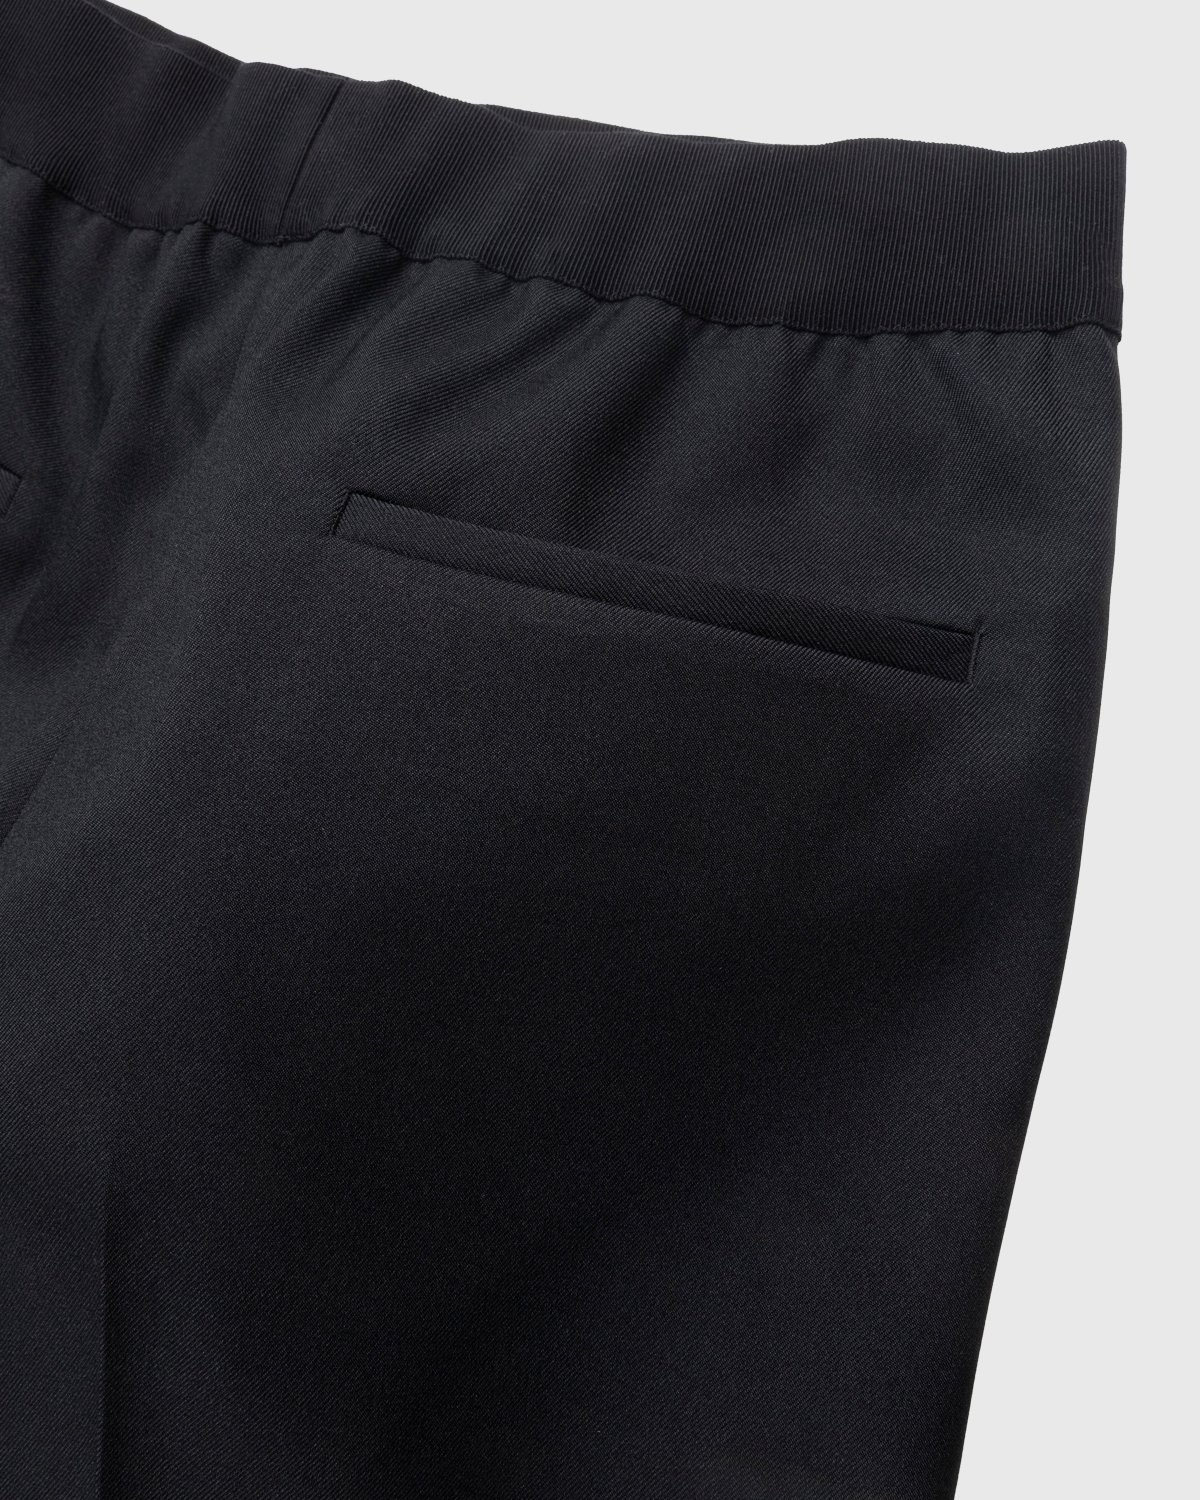 Jil Sander – Polyester Trousers Black - Trousers - Black - Image 5